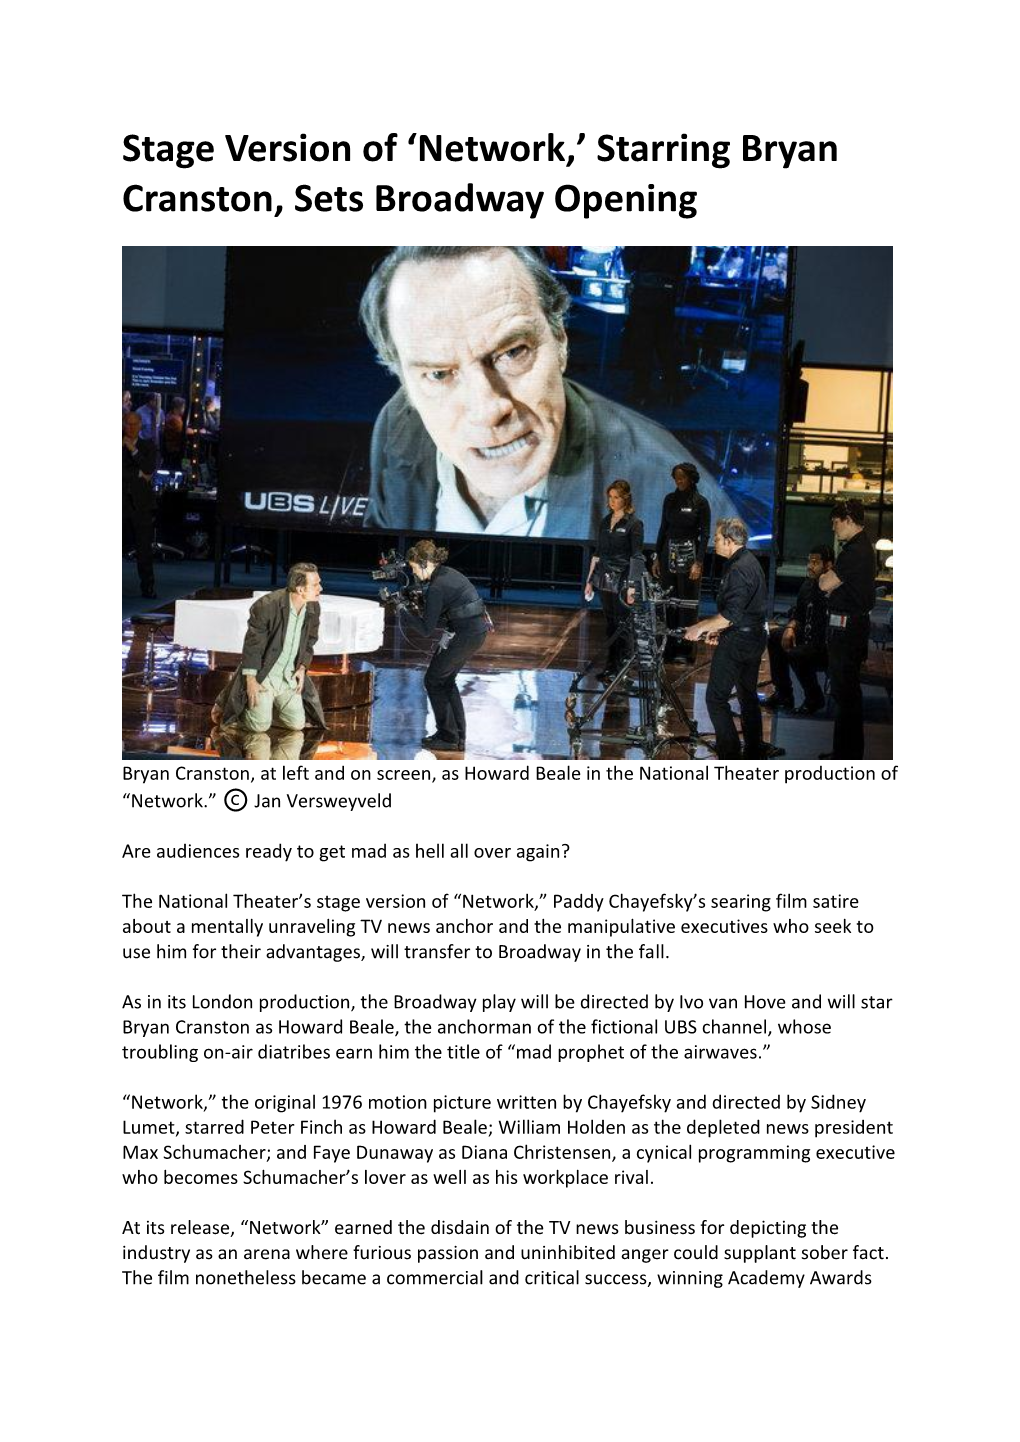 Stage Version of 'Network,' Starring Bryan Cranston, Sets Broadway